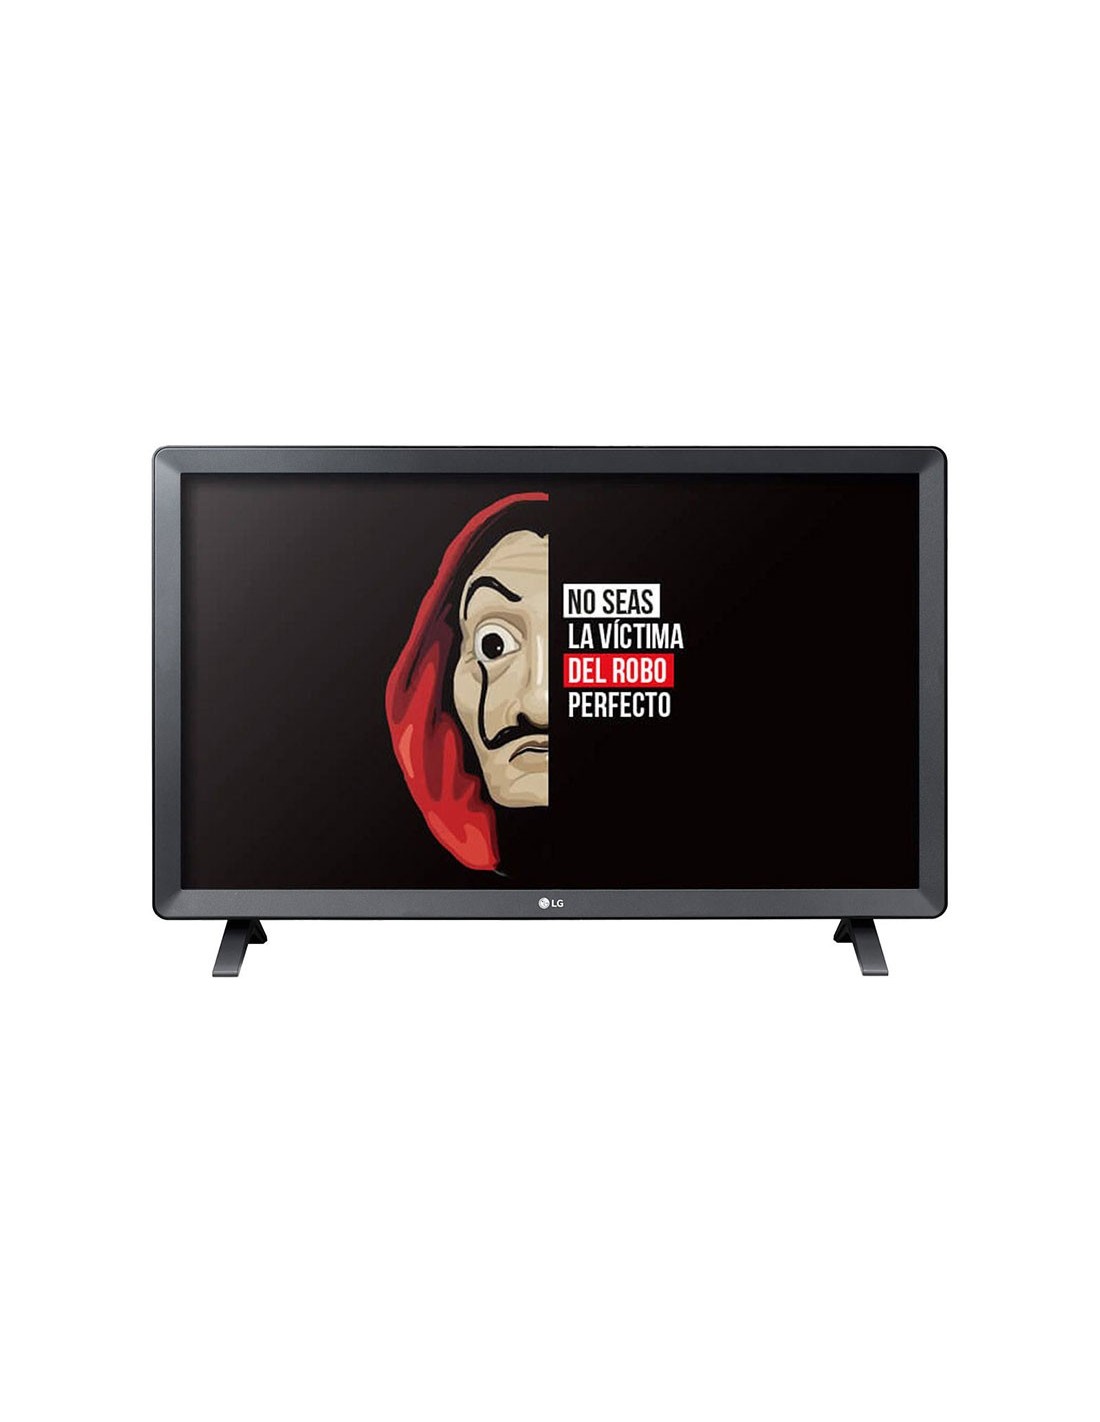 Corotos  TELEVISOR LG SMART TV MONITOR 24 PULGADAS HD LED WIFI